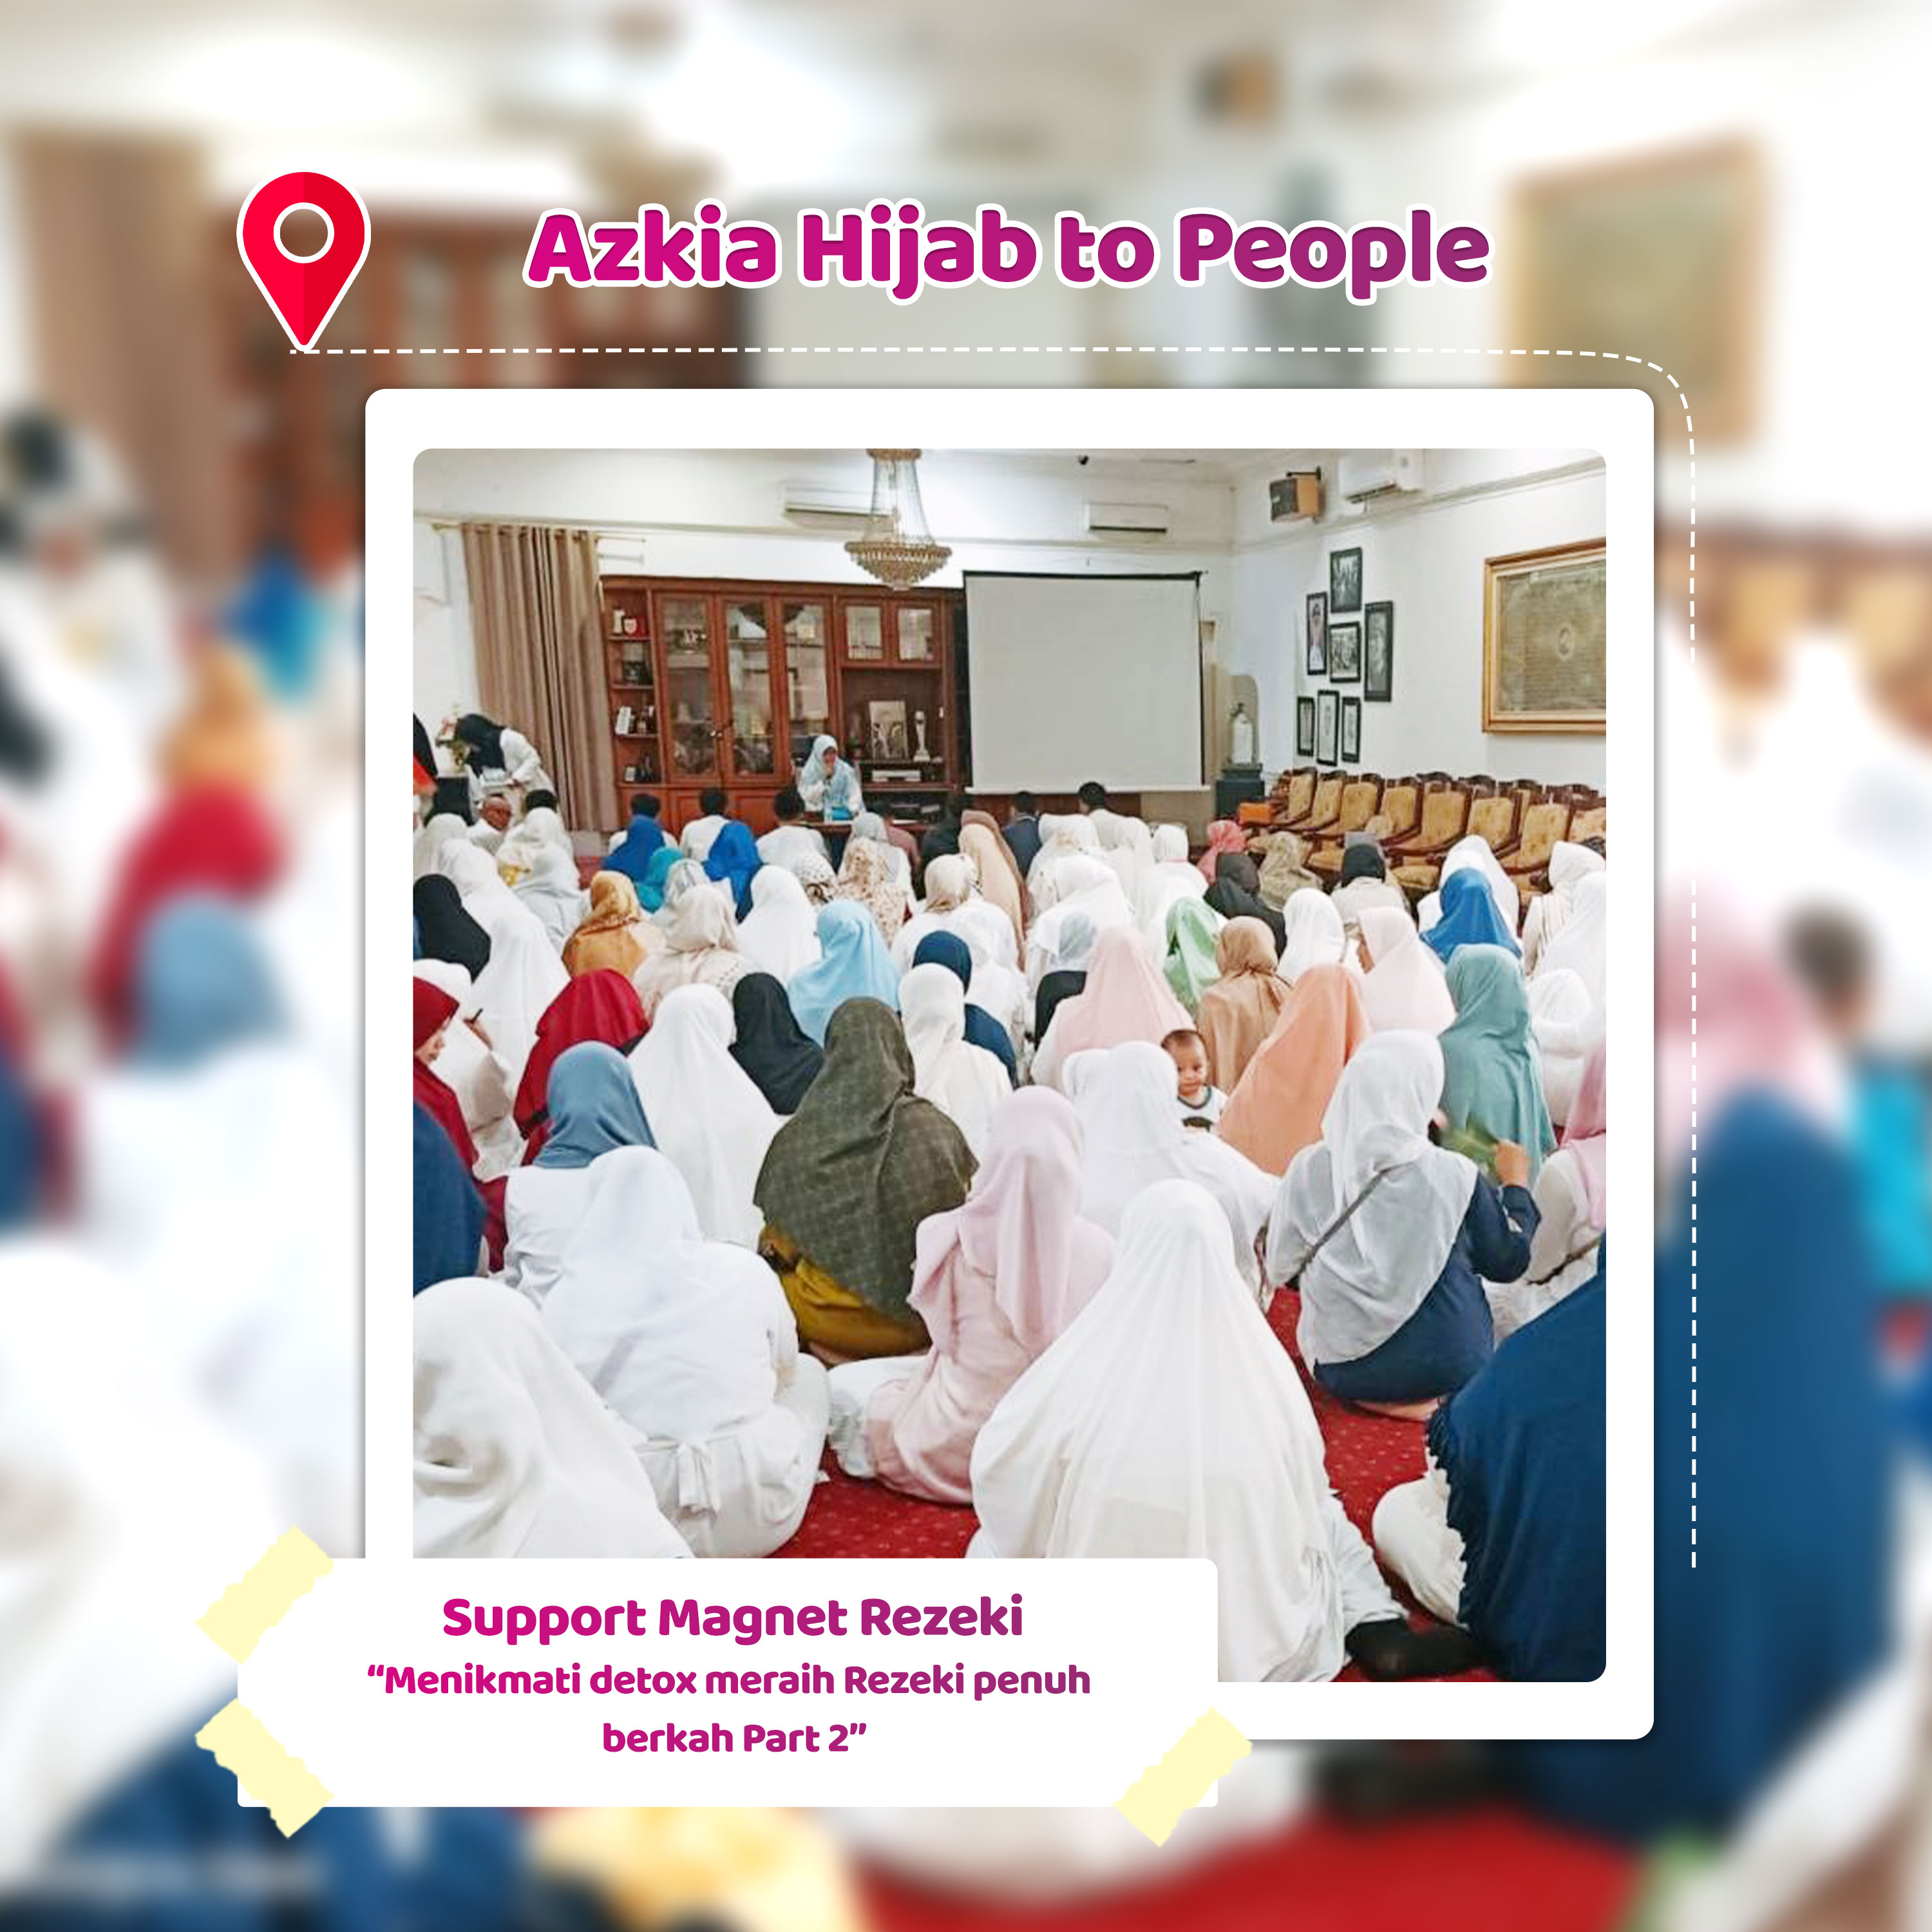 Azkia Hijab Mendukung Komunitas Pengamal Ilmu Magnet Rezeki di Kota Sukabumi desc